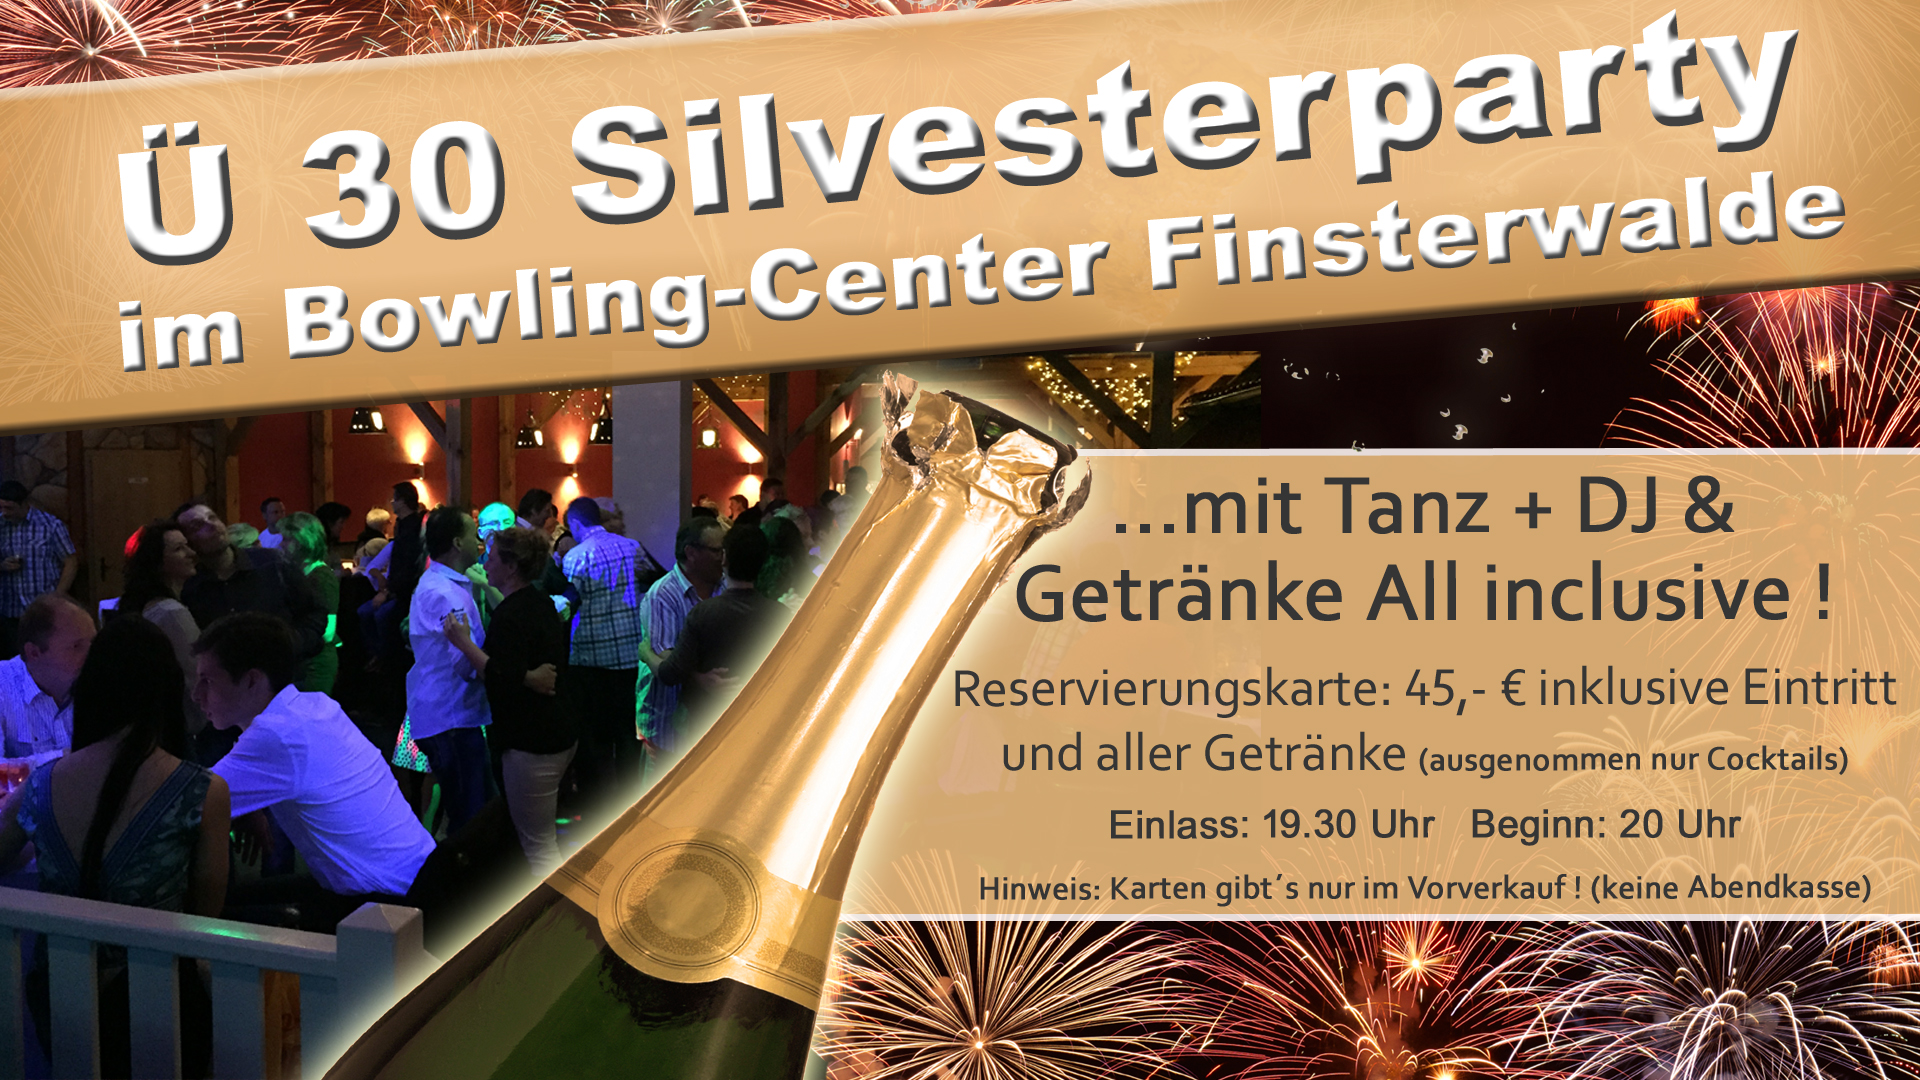 Ü 30 Silvesterparty im Bowling-Center Finstewalde